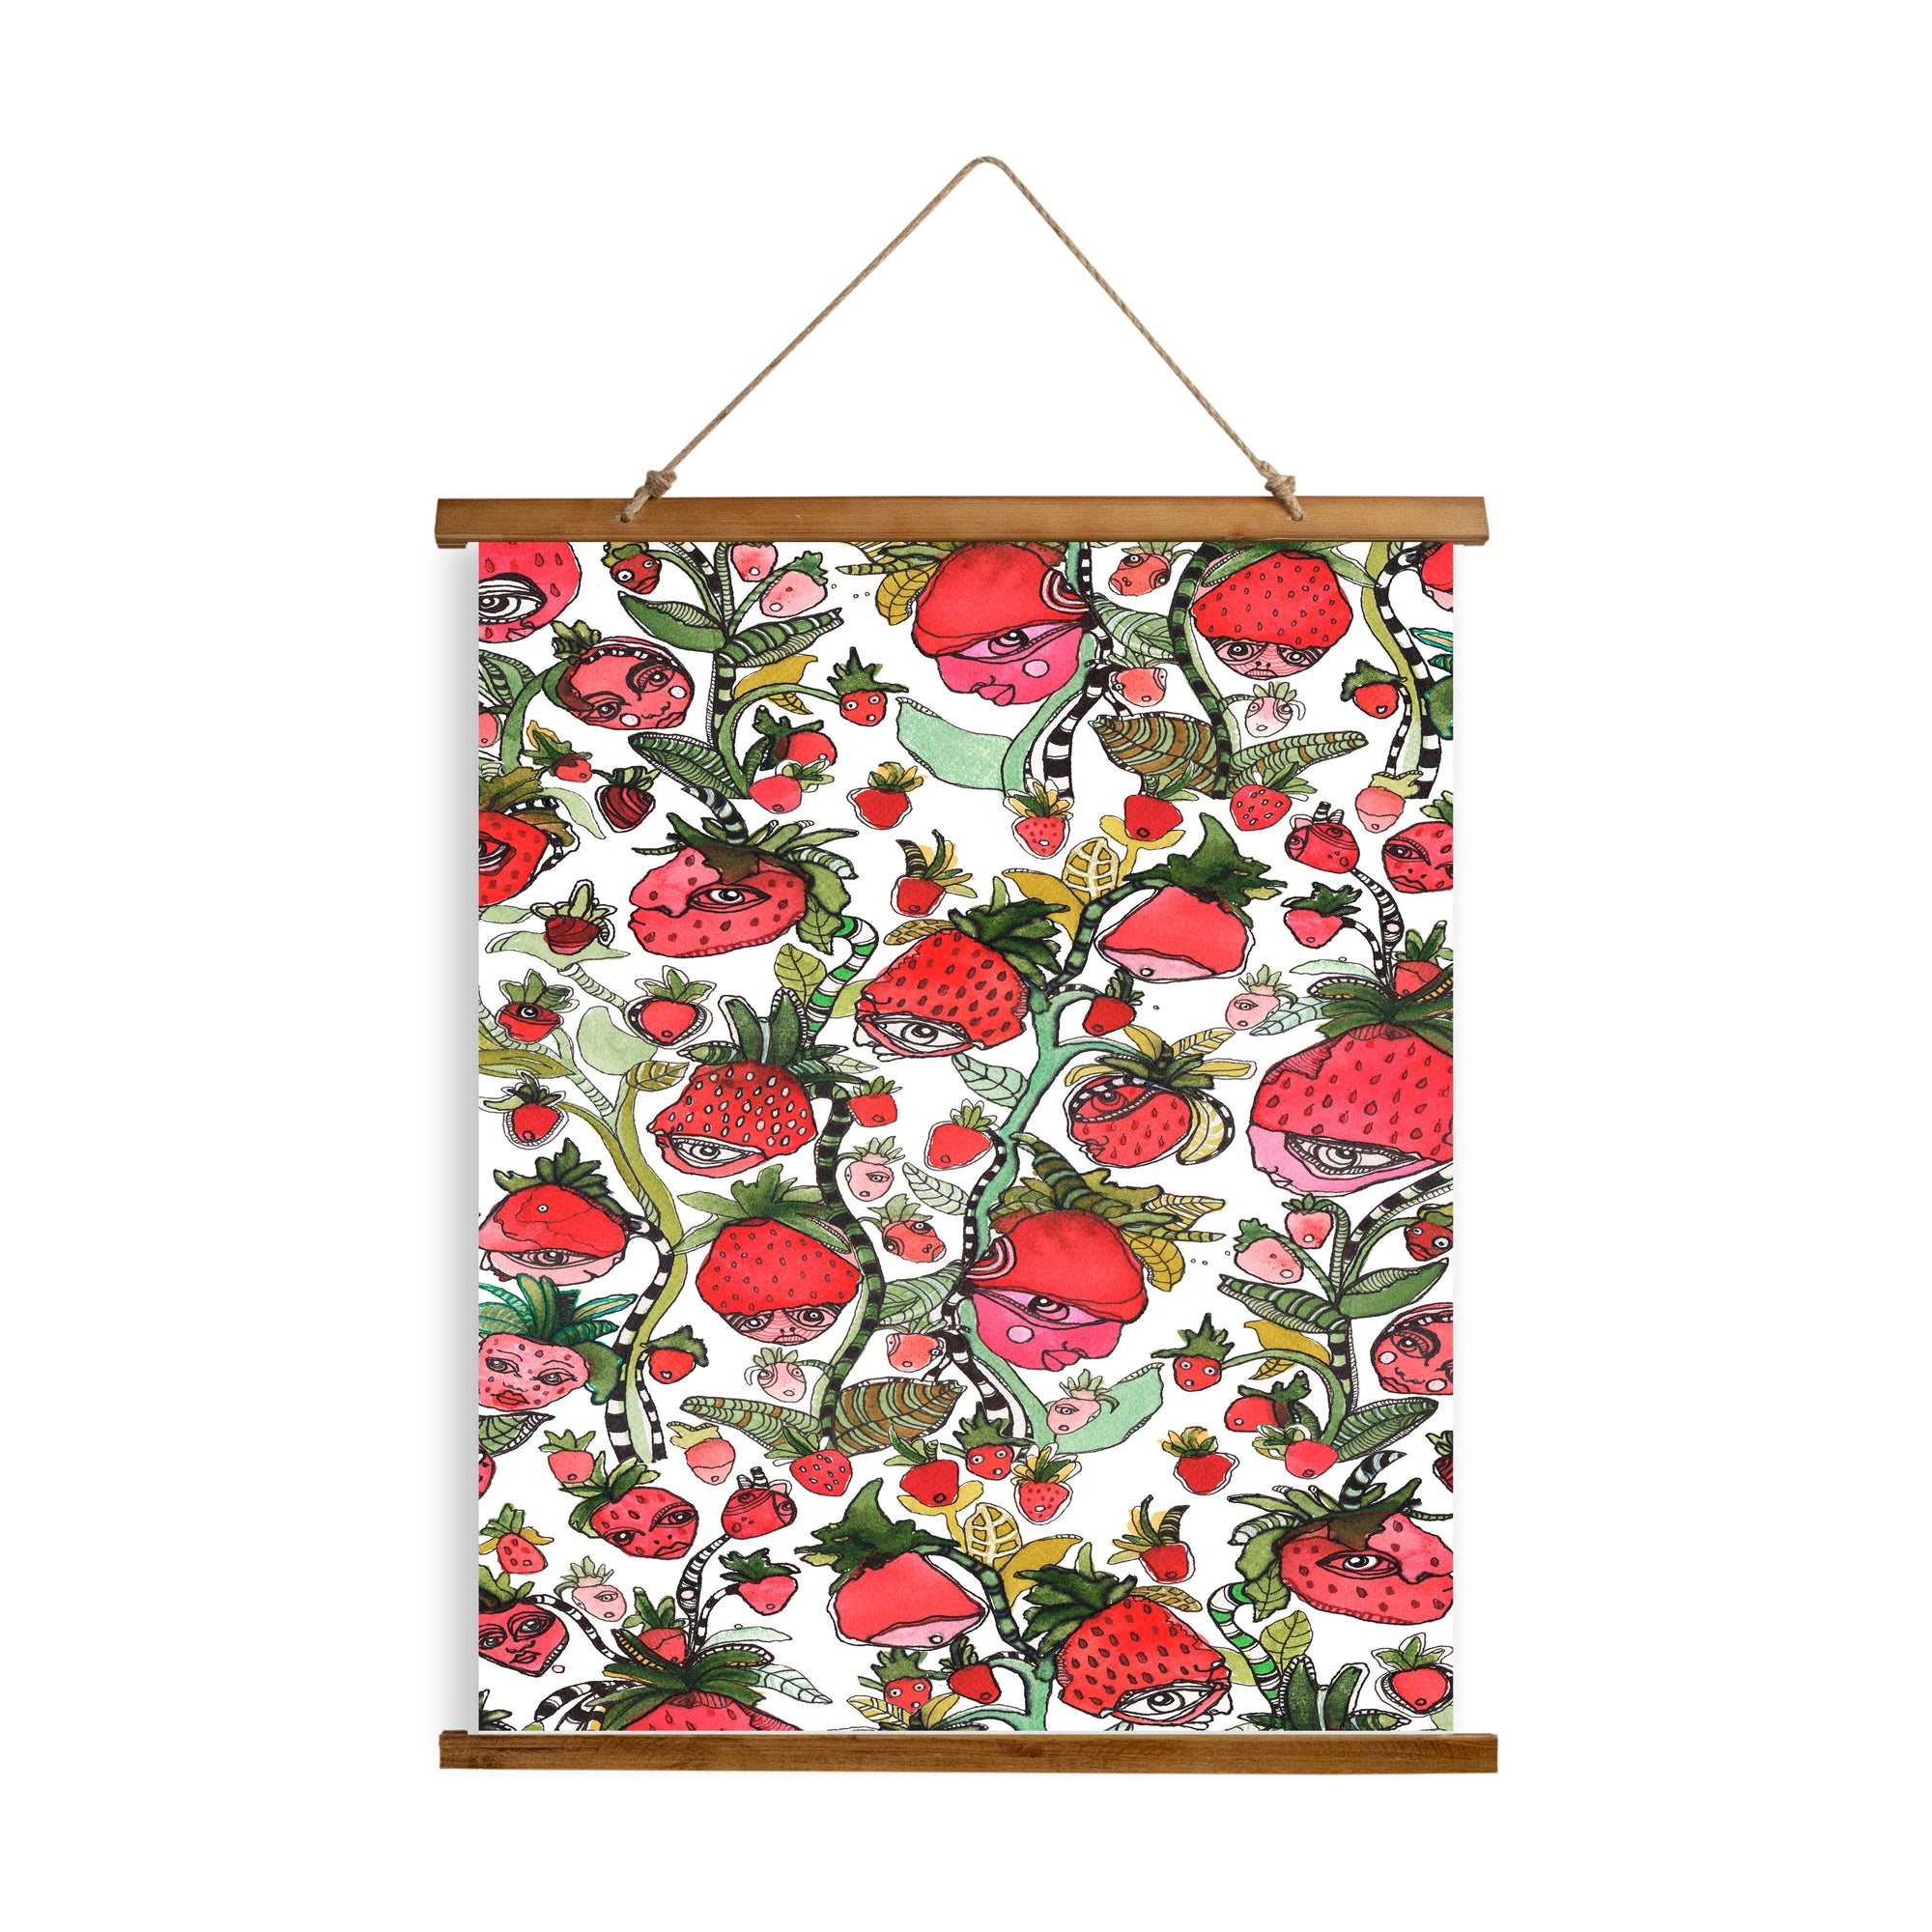 Whimsical Wood Slat Tapestry "Strawberry Friends White"